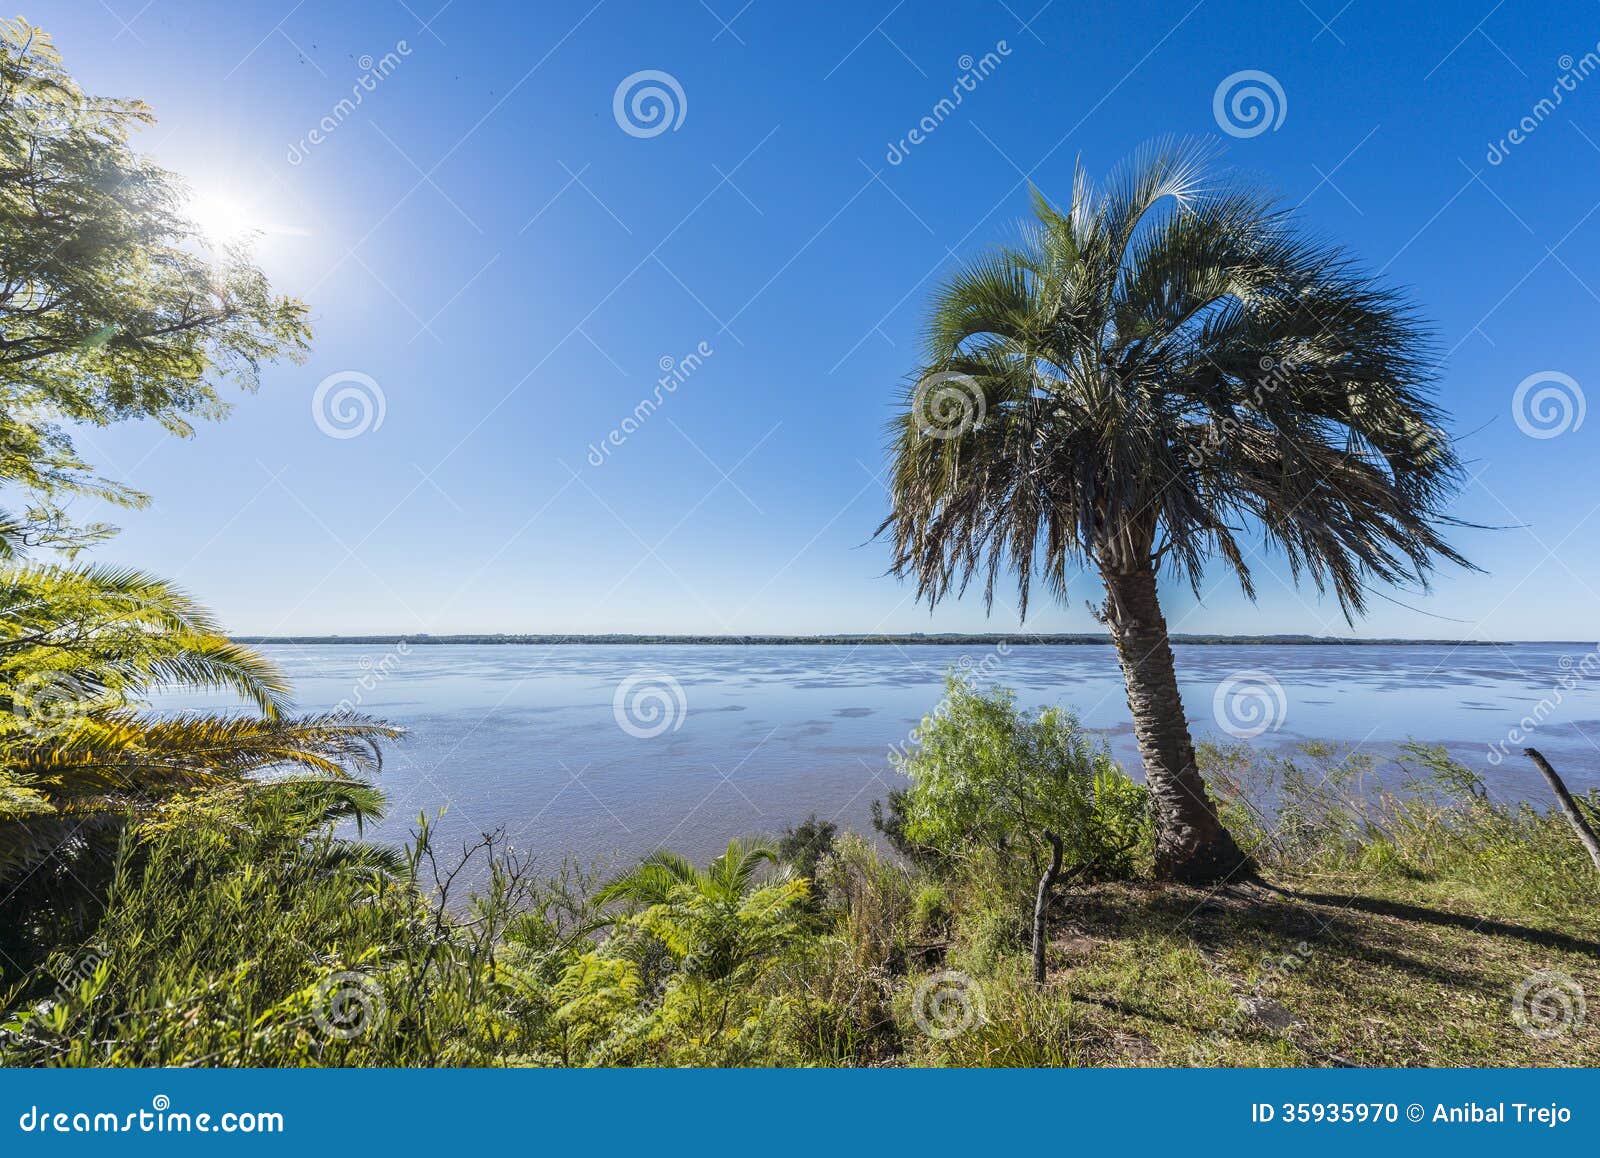 palms on el palmar national park, argentina